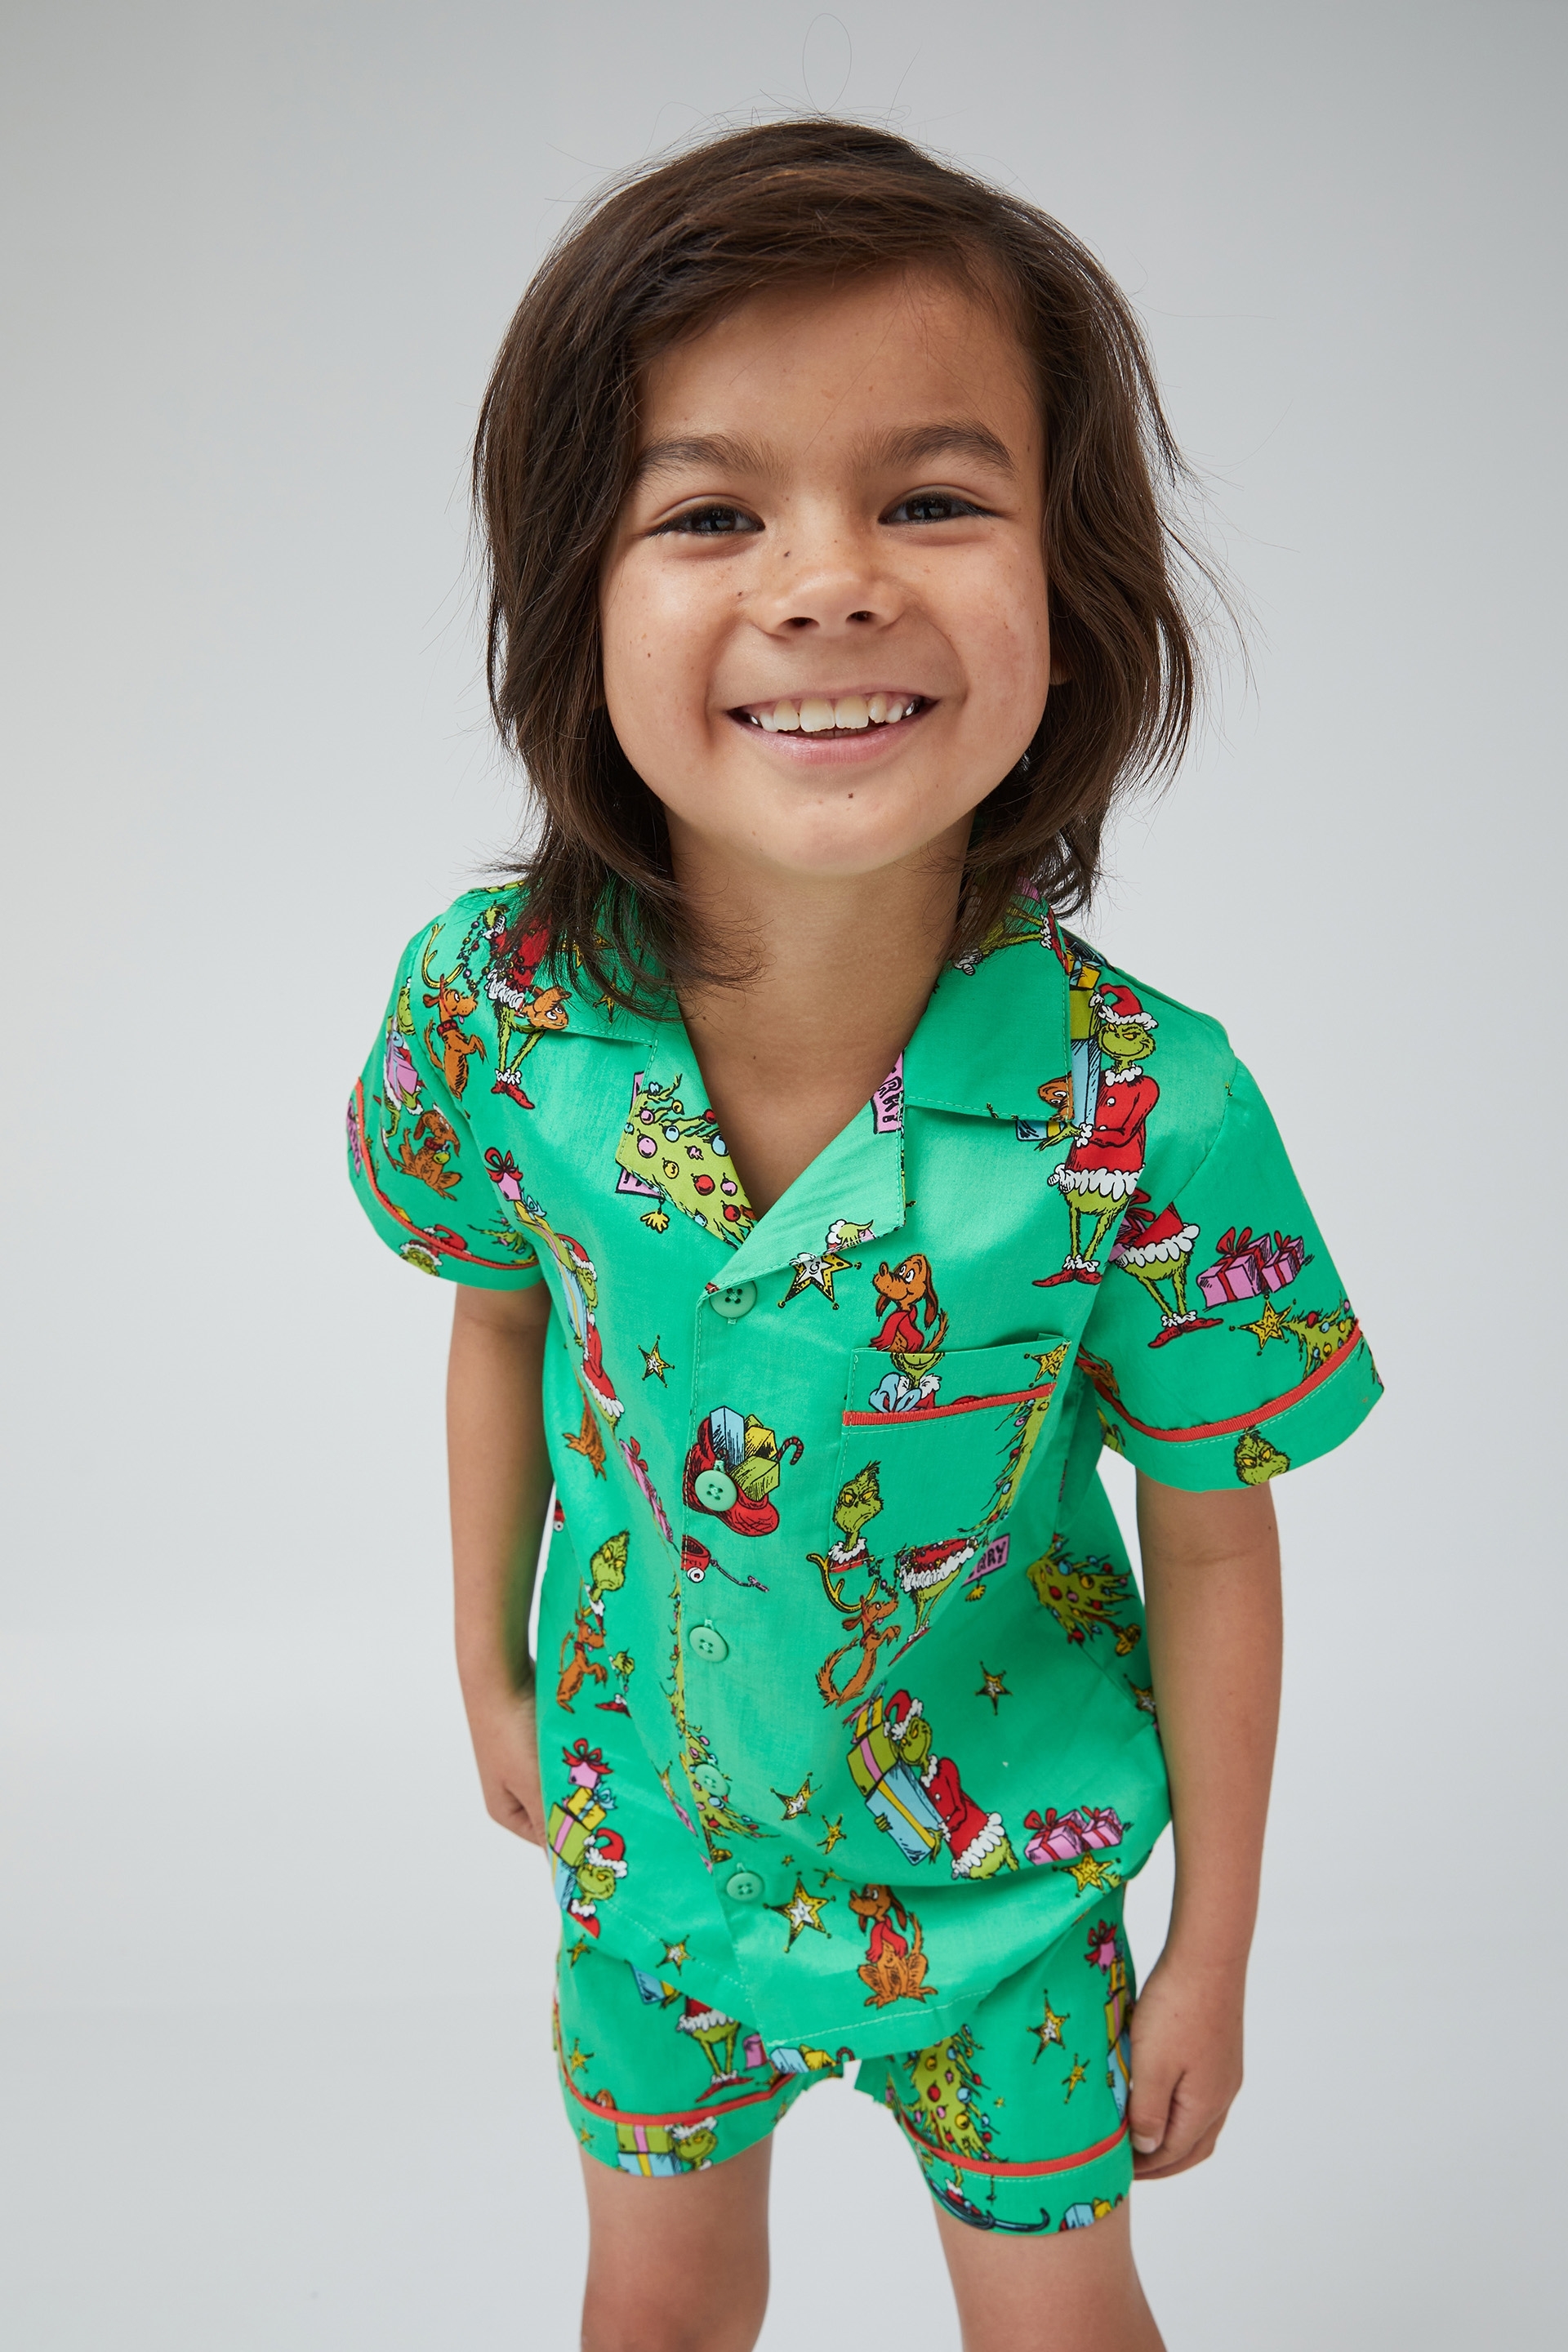 Cotton On Kids - Riley Kids Unisex Short Sleeve Pyjama Set Licensed - Lcn drs toffee apple/the grinch merry merry